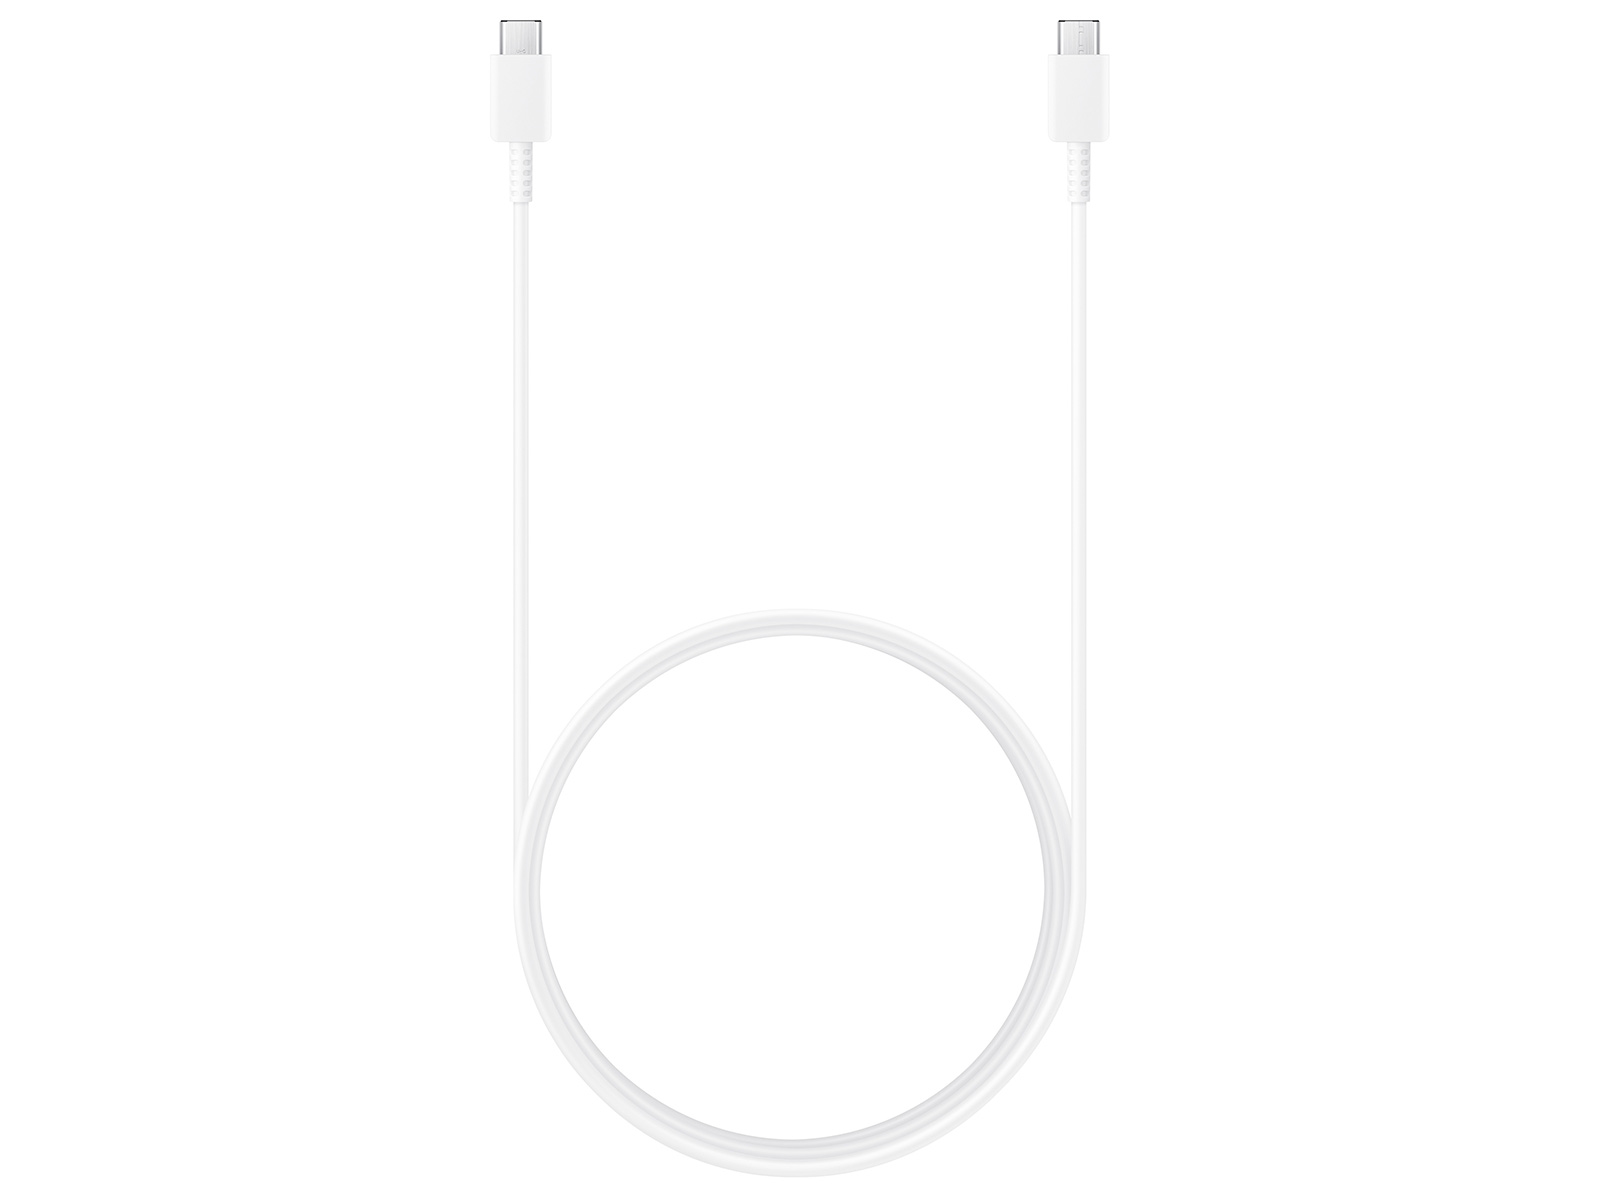 Câble USB Type C original Samsung - blanc